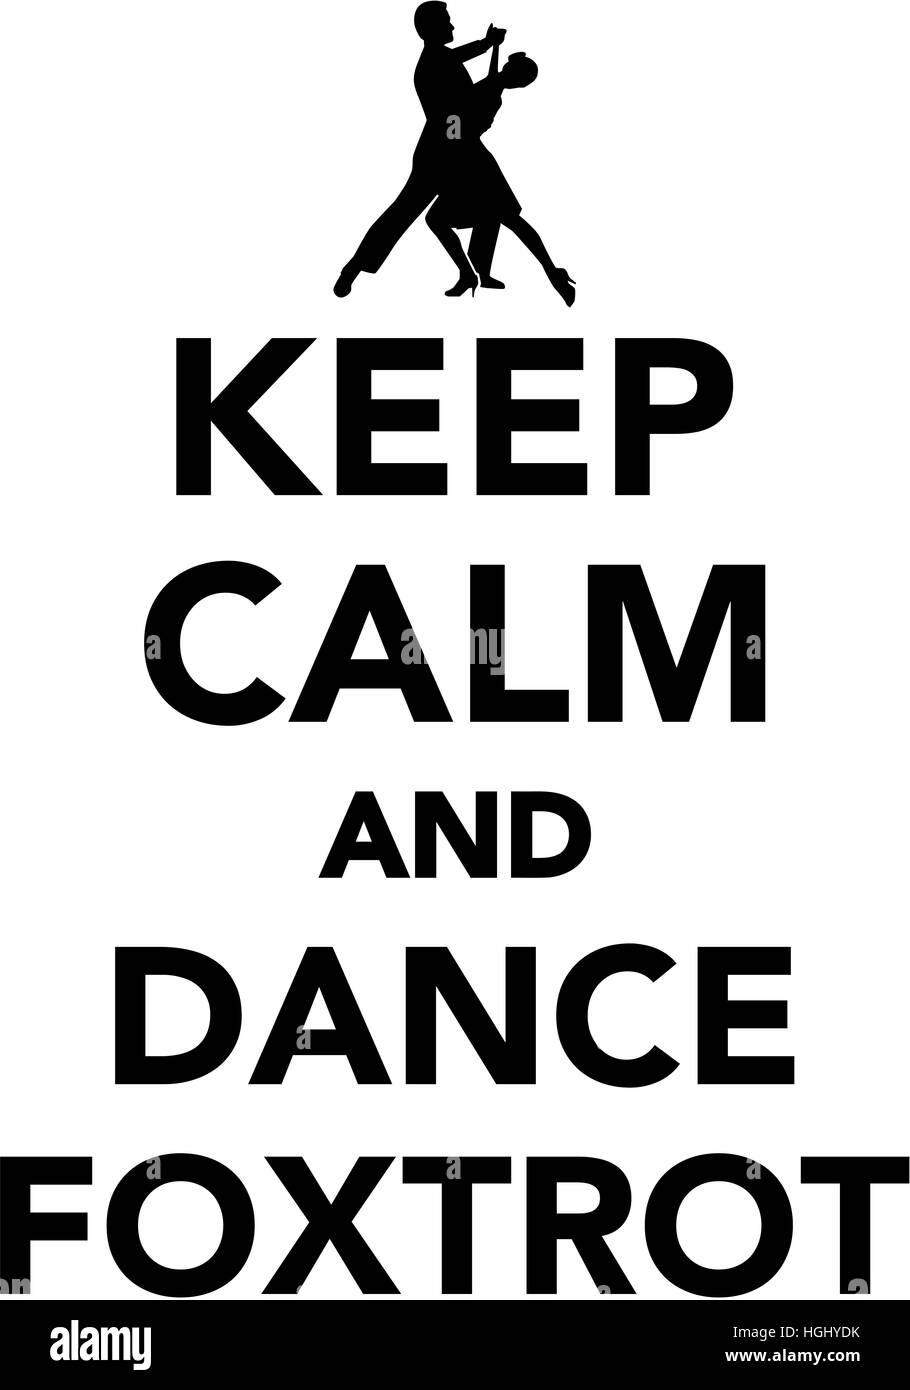 Keep calm and dance foxtrot Stock Photo